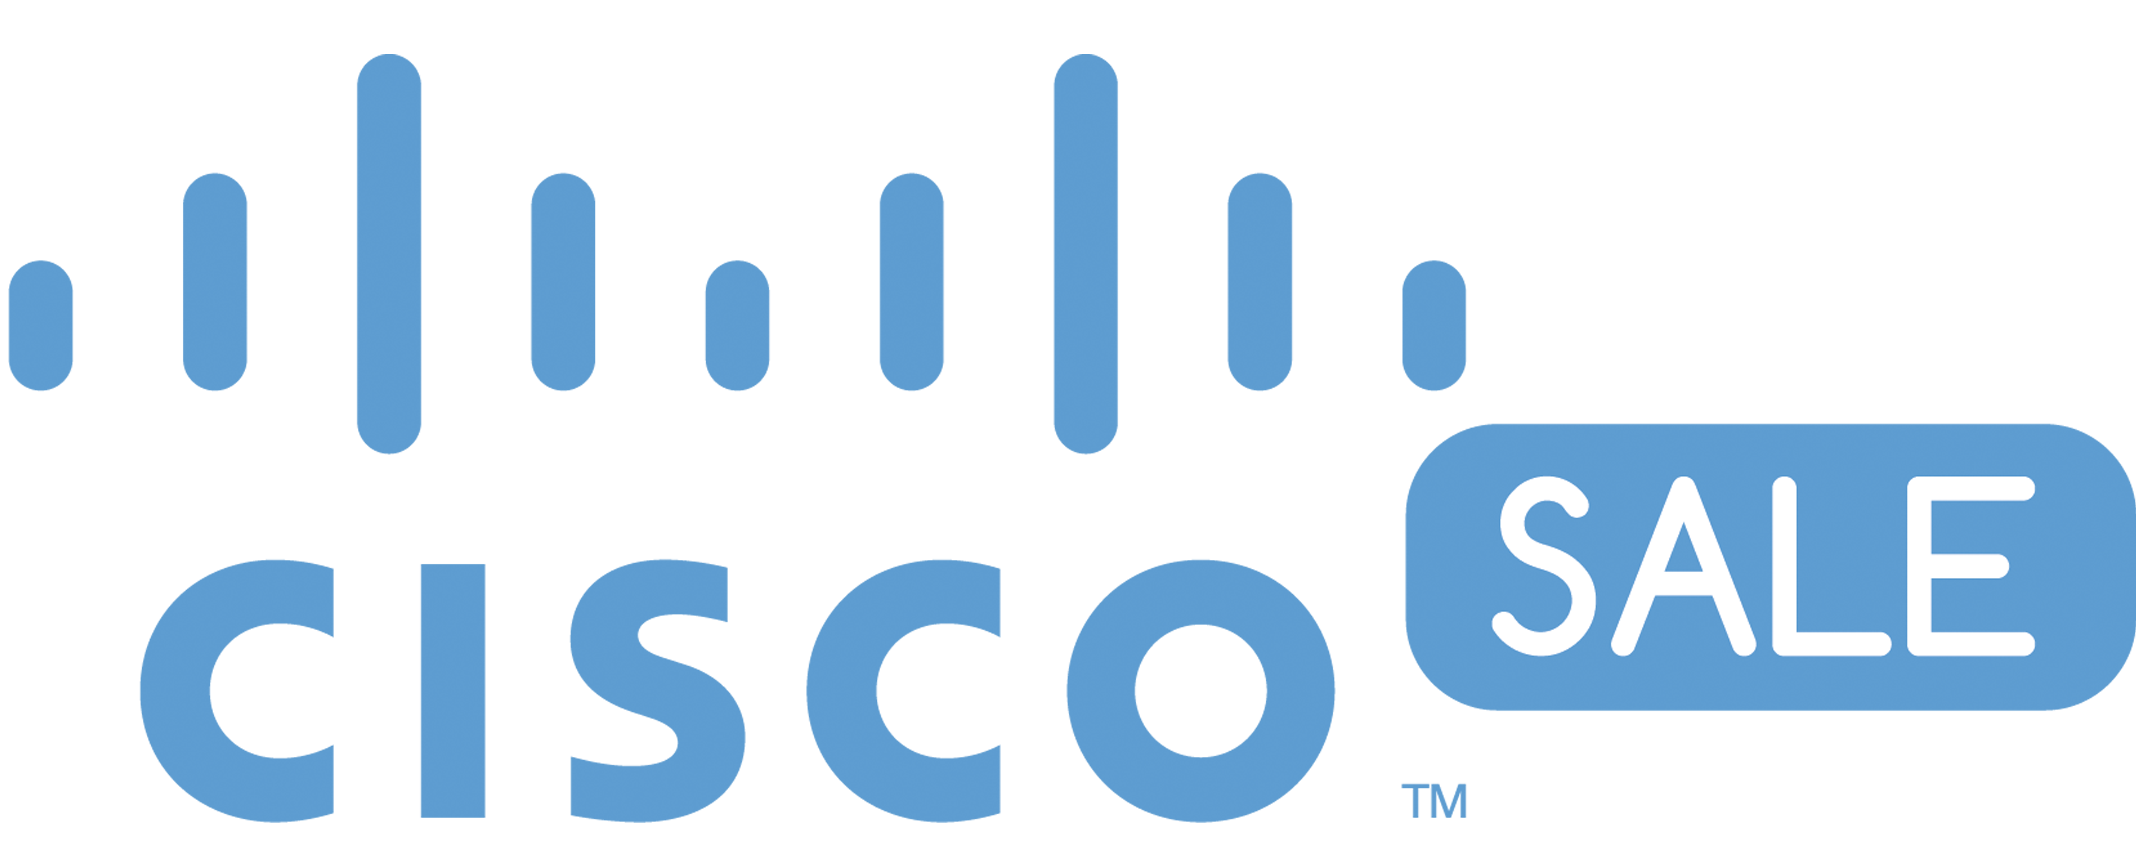 Cisco Sale